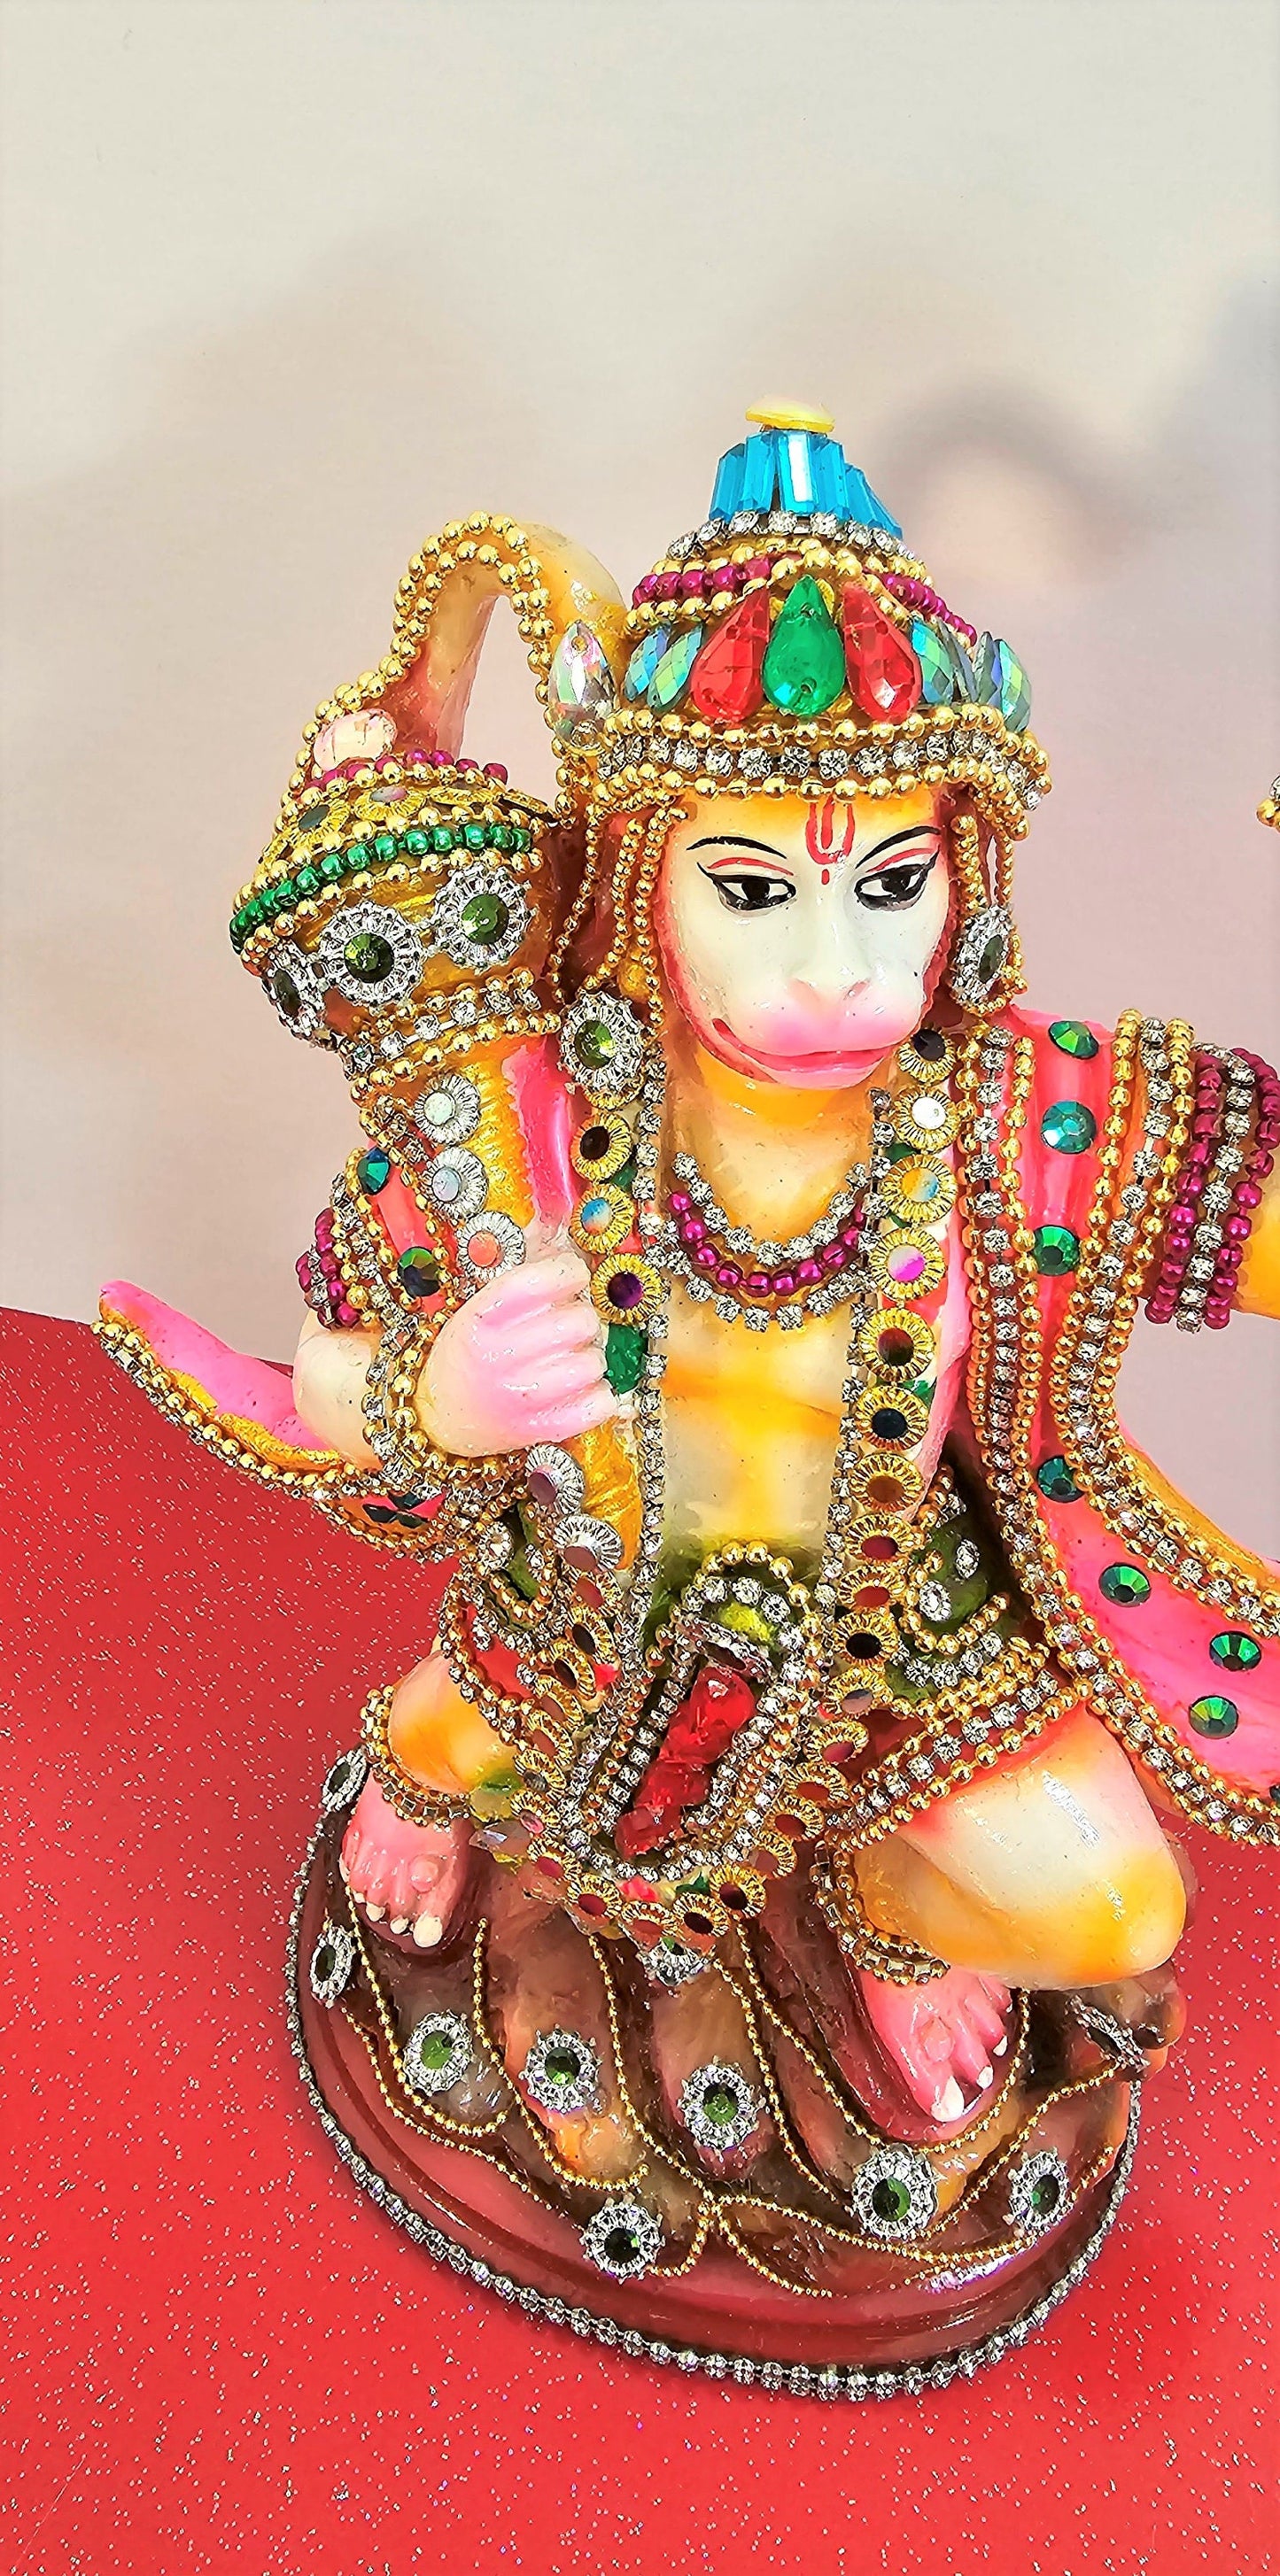 Rare hand decorated Lord Hanuman ( Bajrangbali ) statue